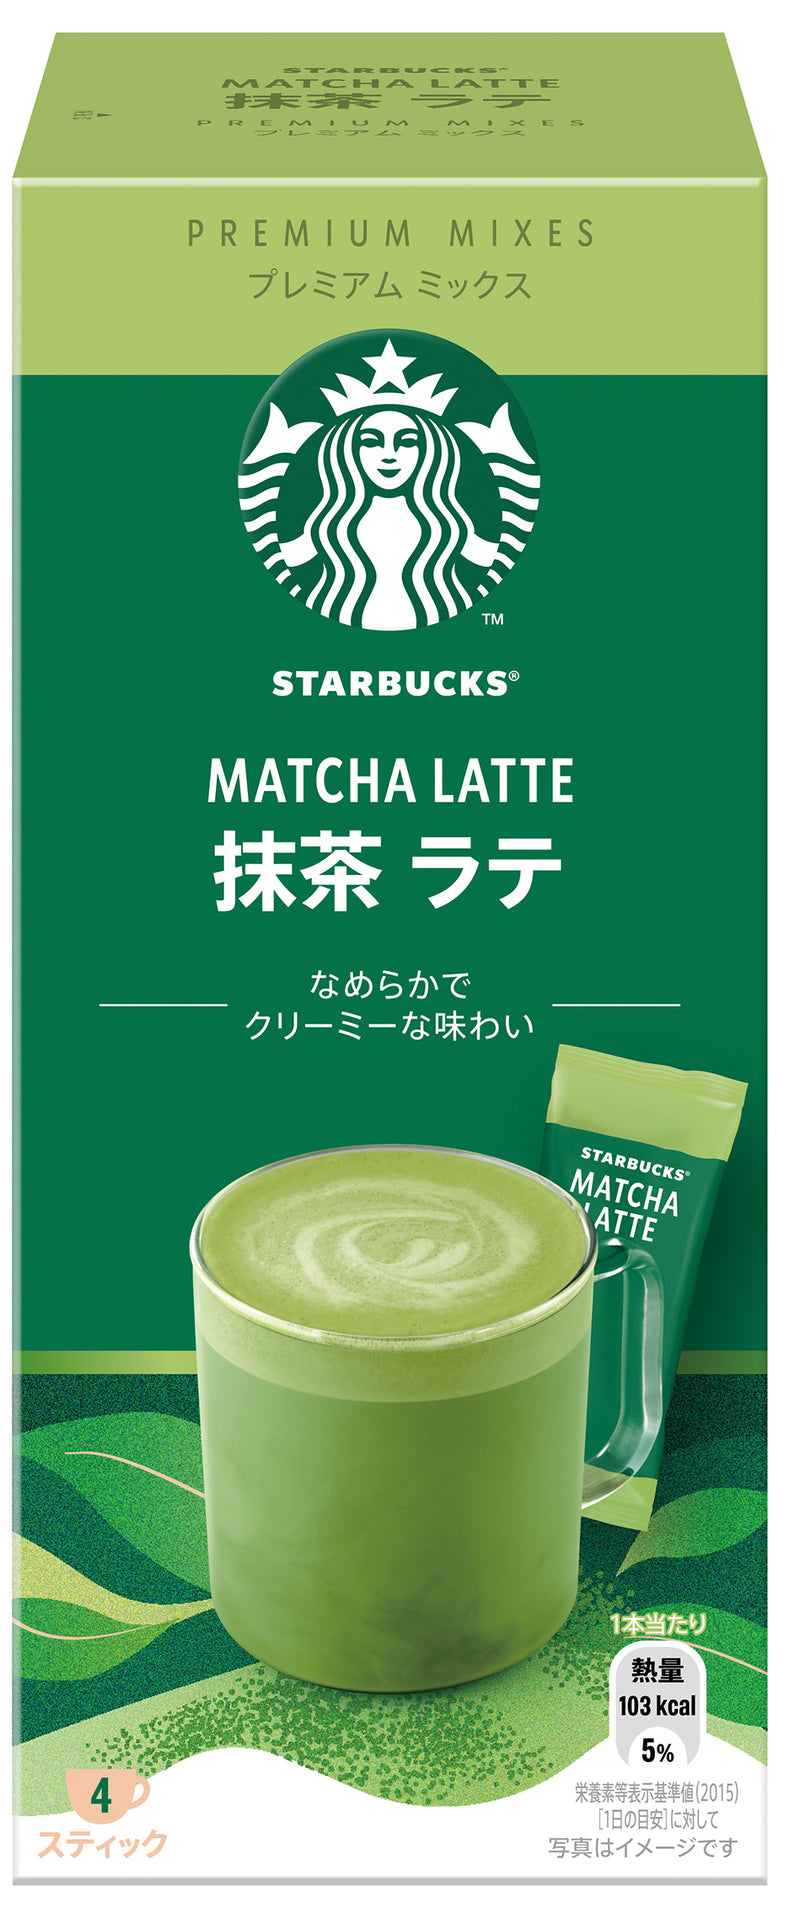 STARBUCKS® Matcha Latte Premium Mixes 4's